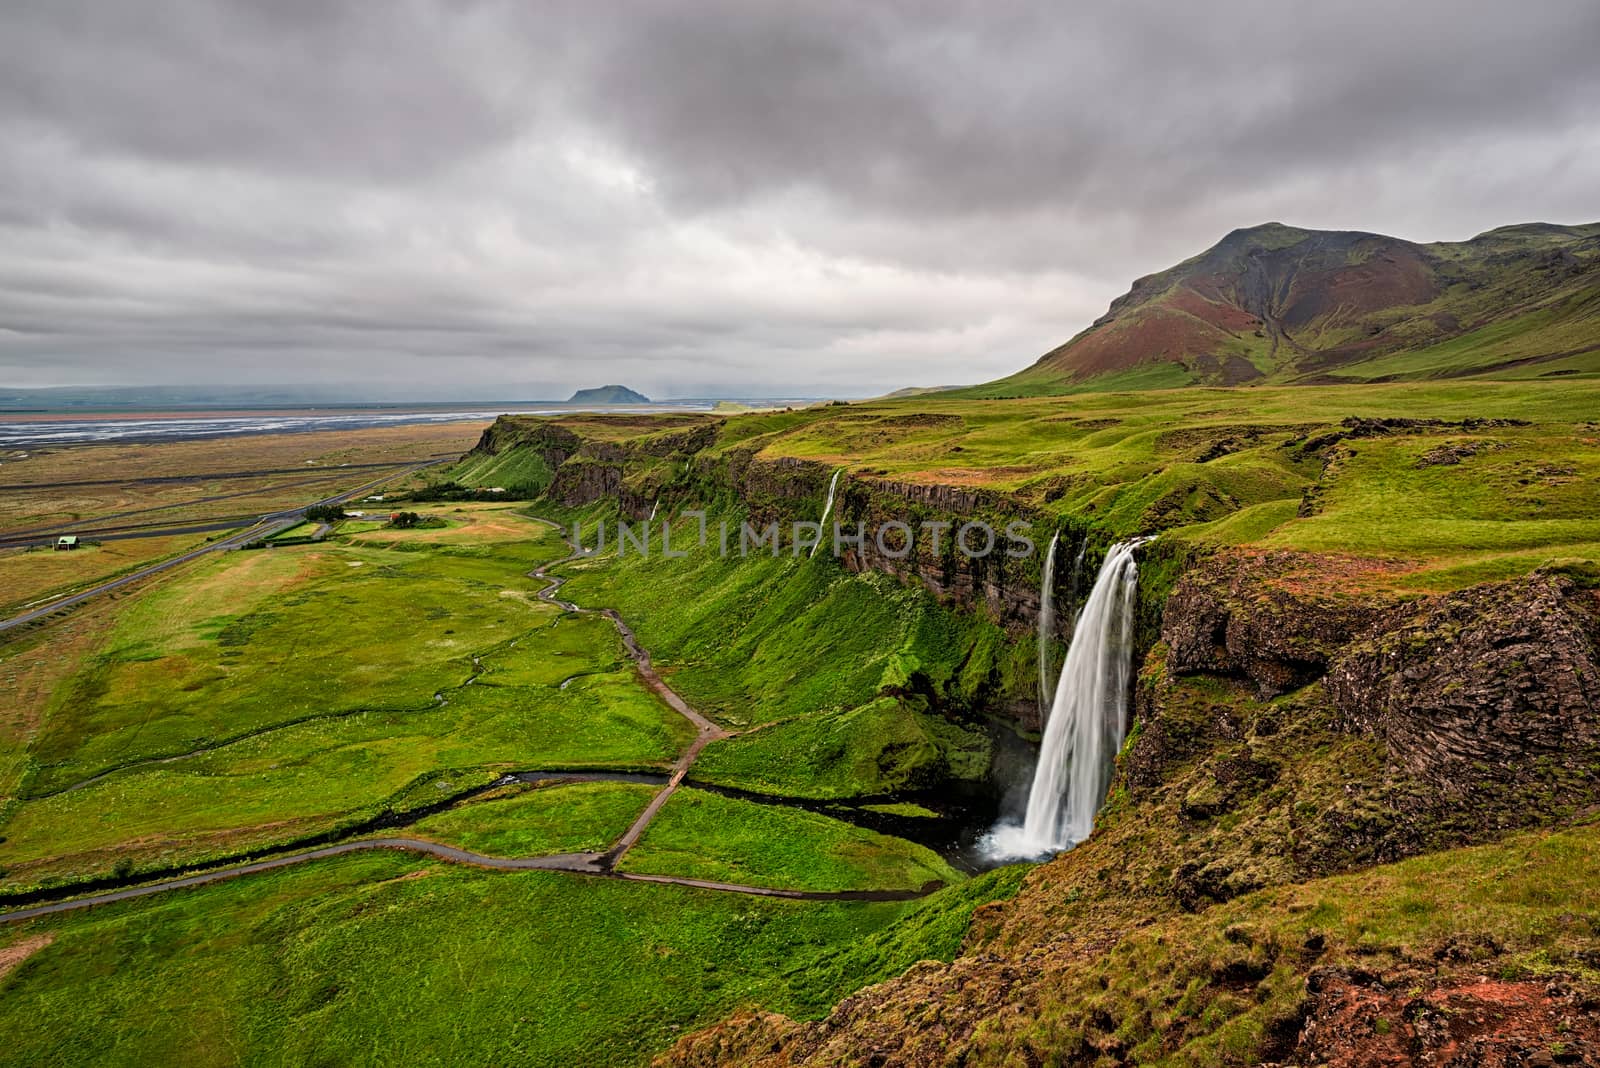 Seljalandsfoss waterfall in a cloudy day, Iceland by LuigiMorbidelli